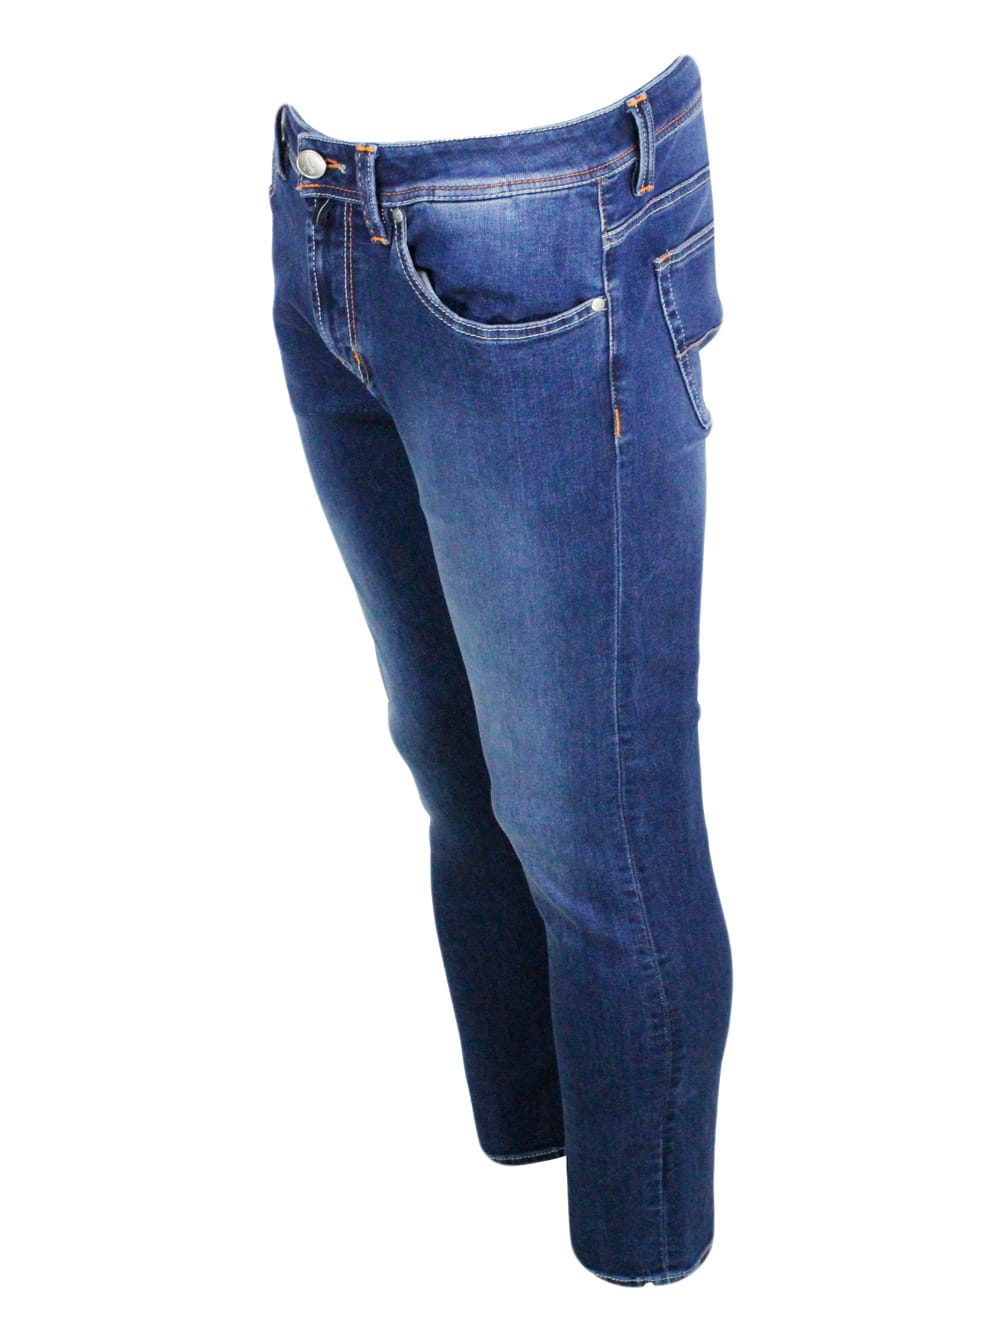 Shop Sartoria Tramarossa Leonardo Zip Monza Trousers In 5-pocket Super Stretch Selvedge Denim With Contrasting Color Tailored